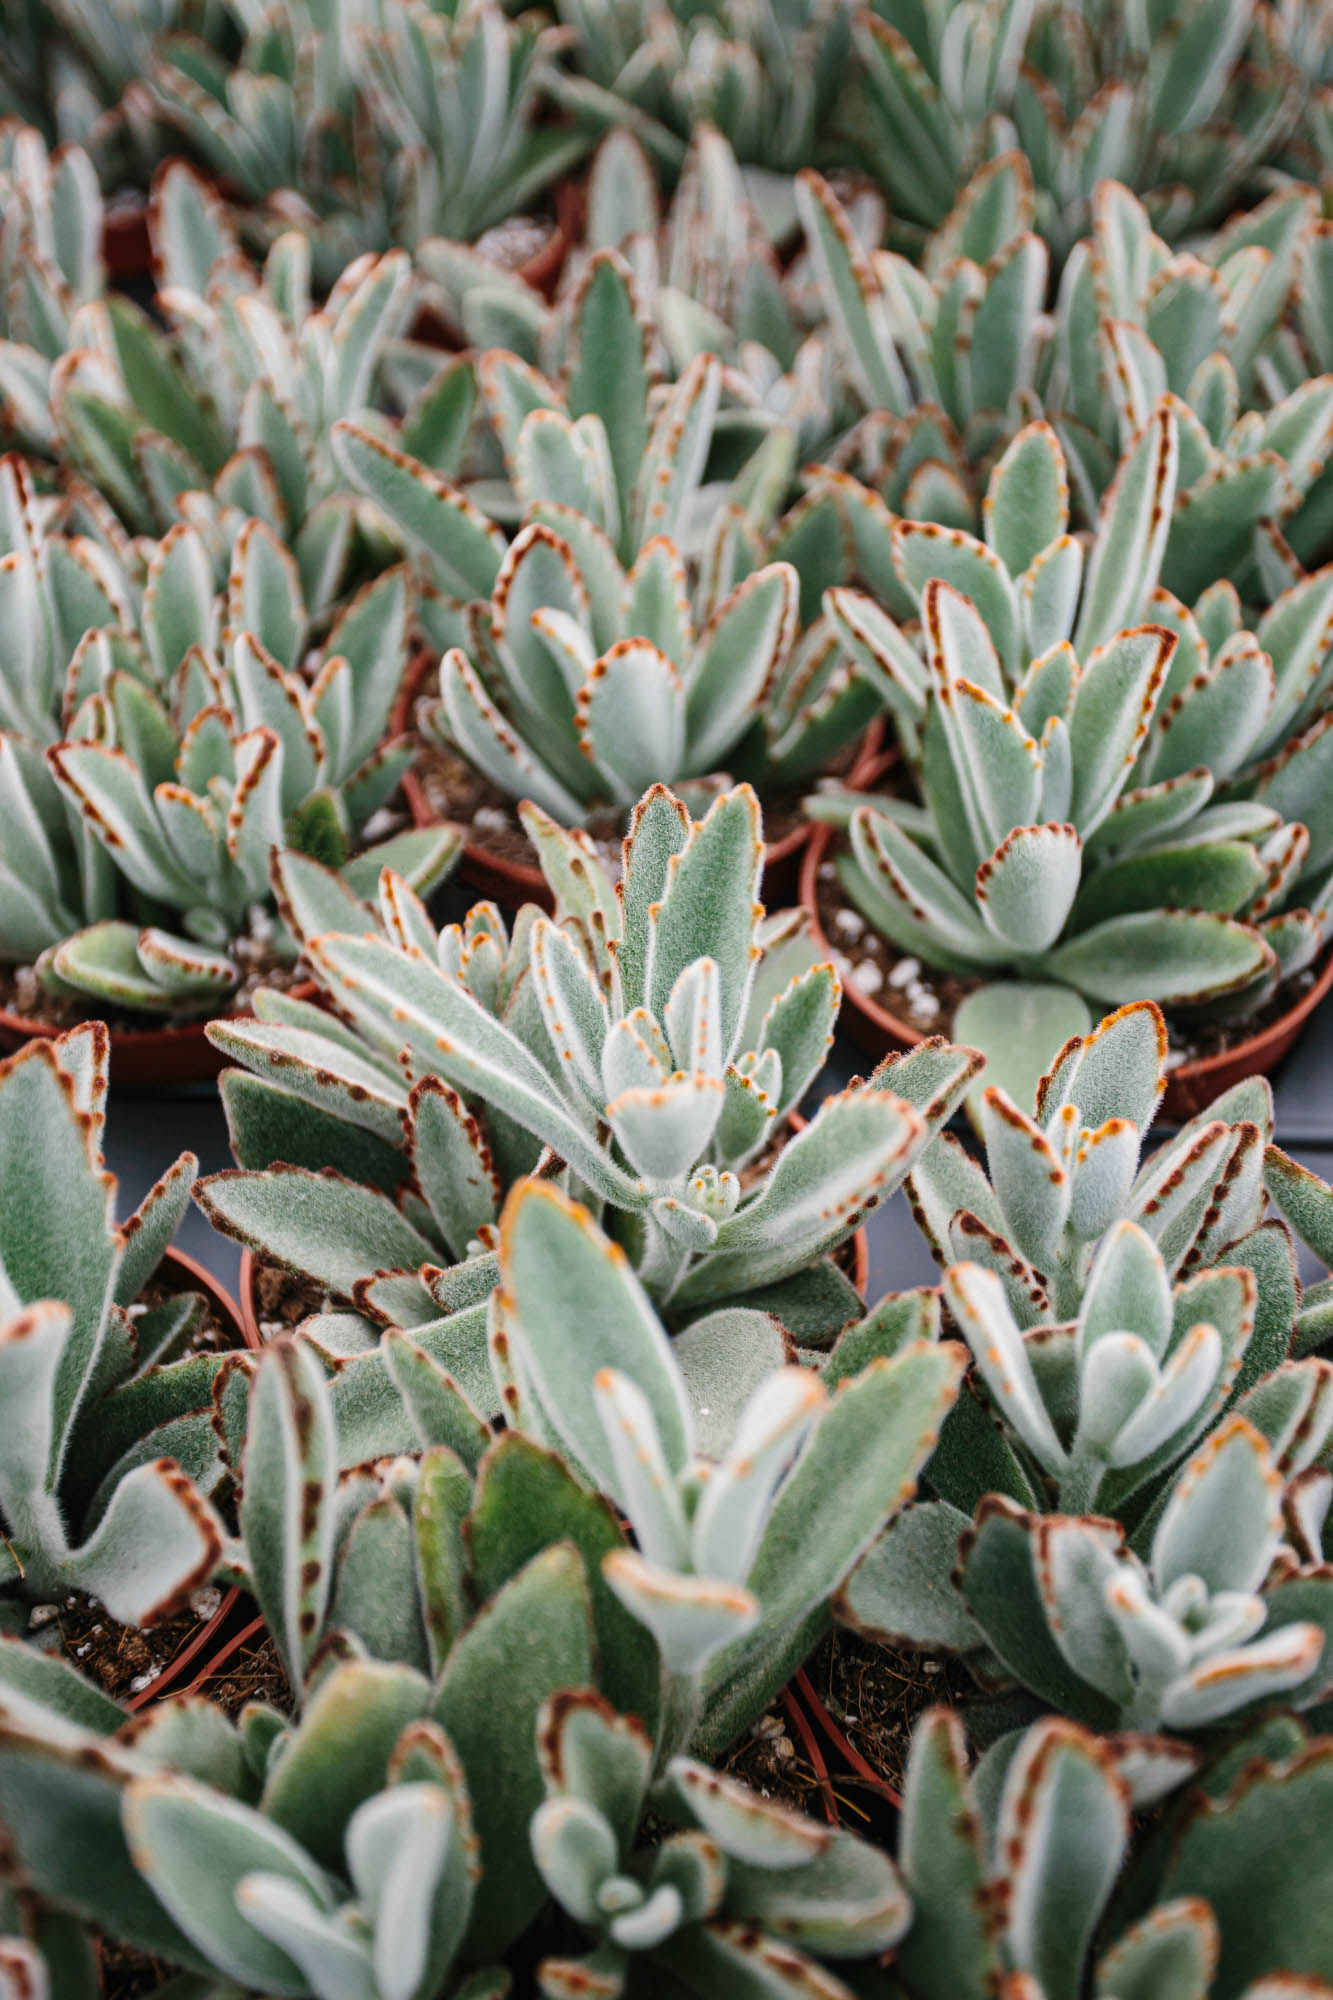 close up of succulents